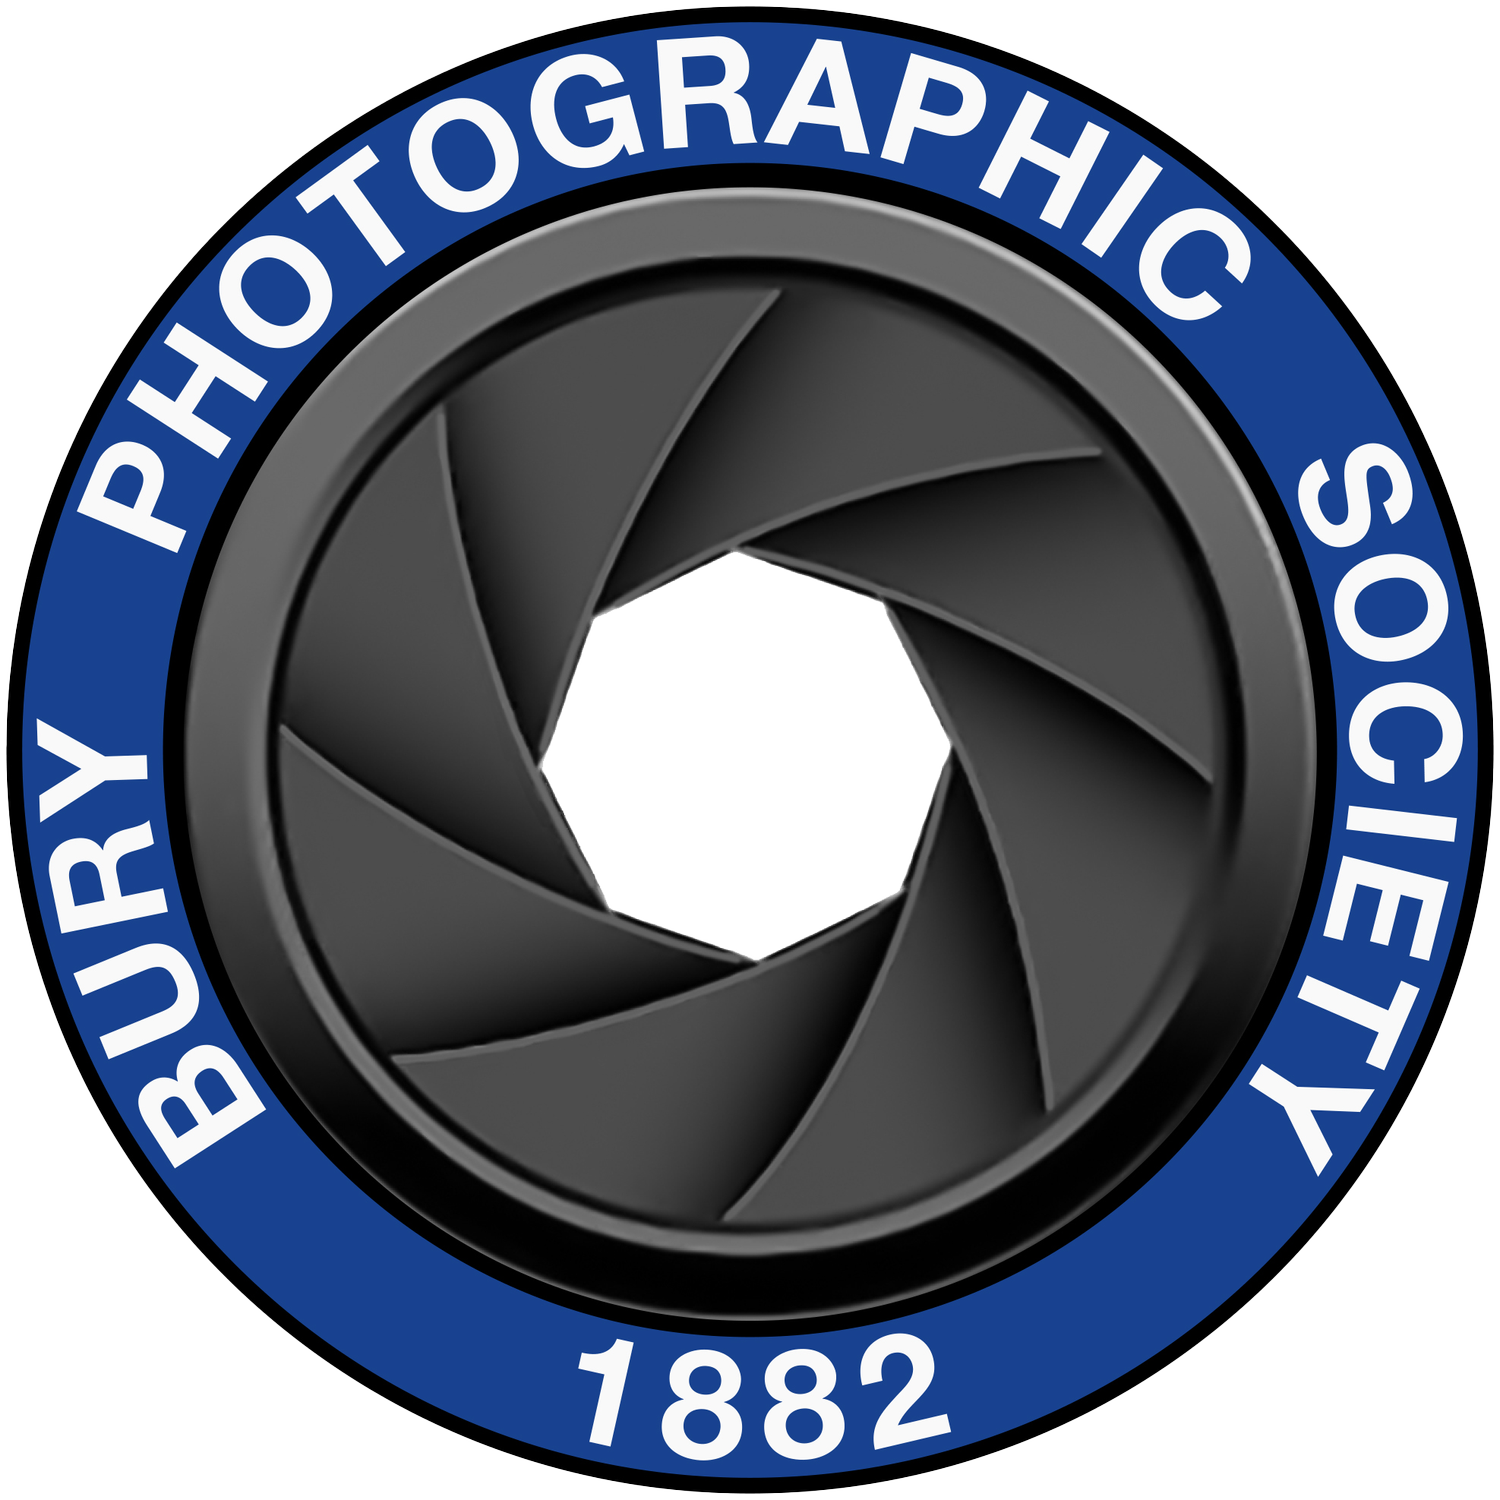 Bury Photographic Society